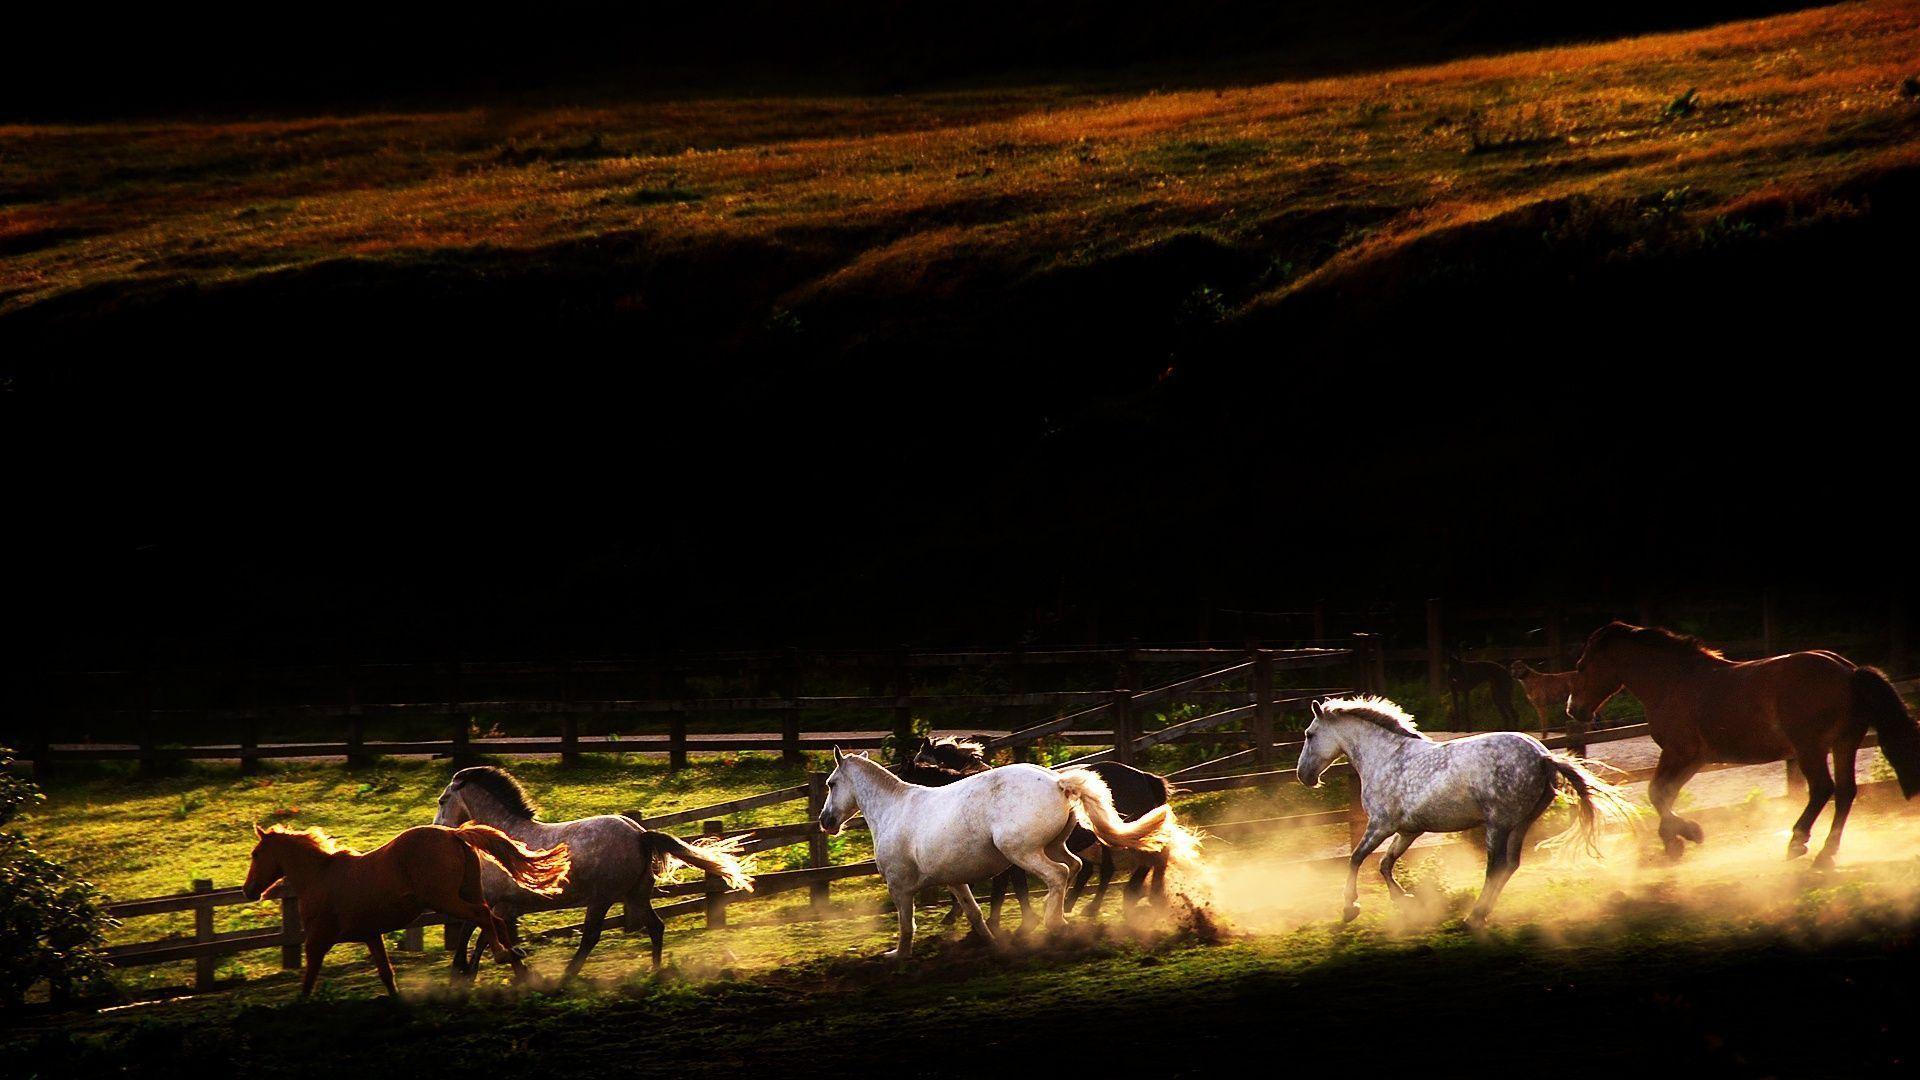 Download Runing Horse HD Desktop Image Wallpaper 1920x1080